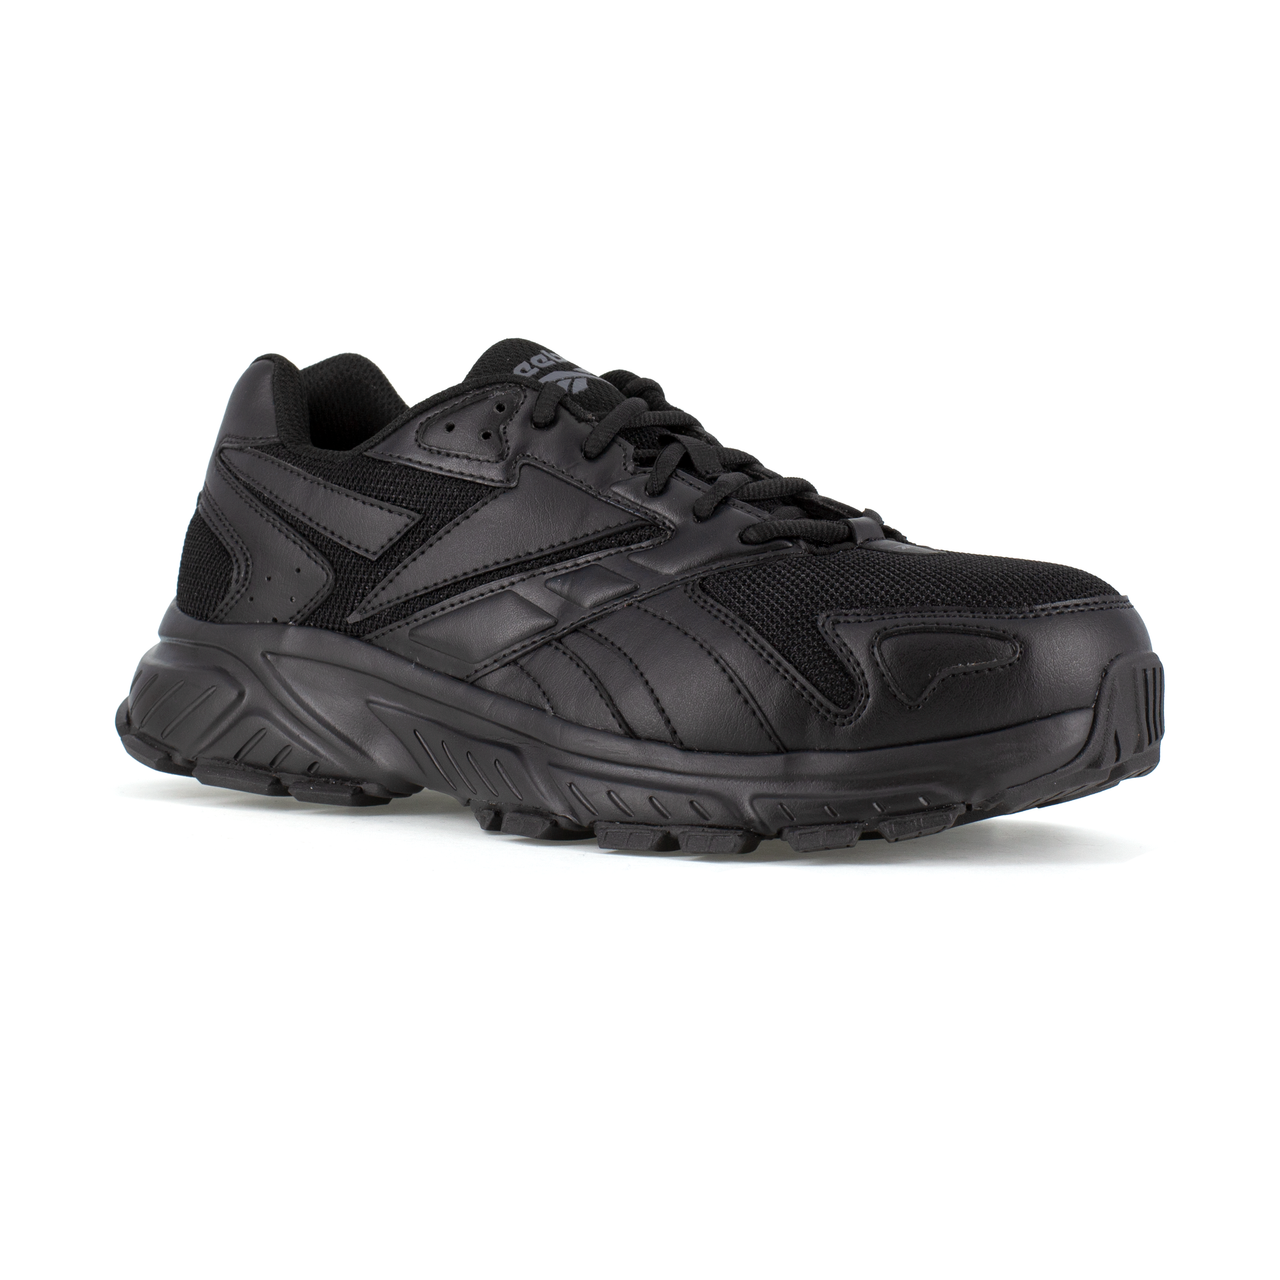 Reebok Work - Men's Footwear - Safety Shoes & Boots